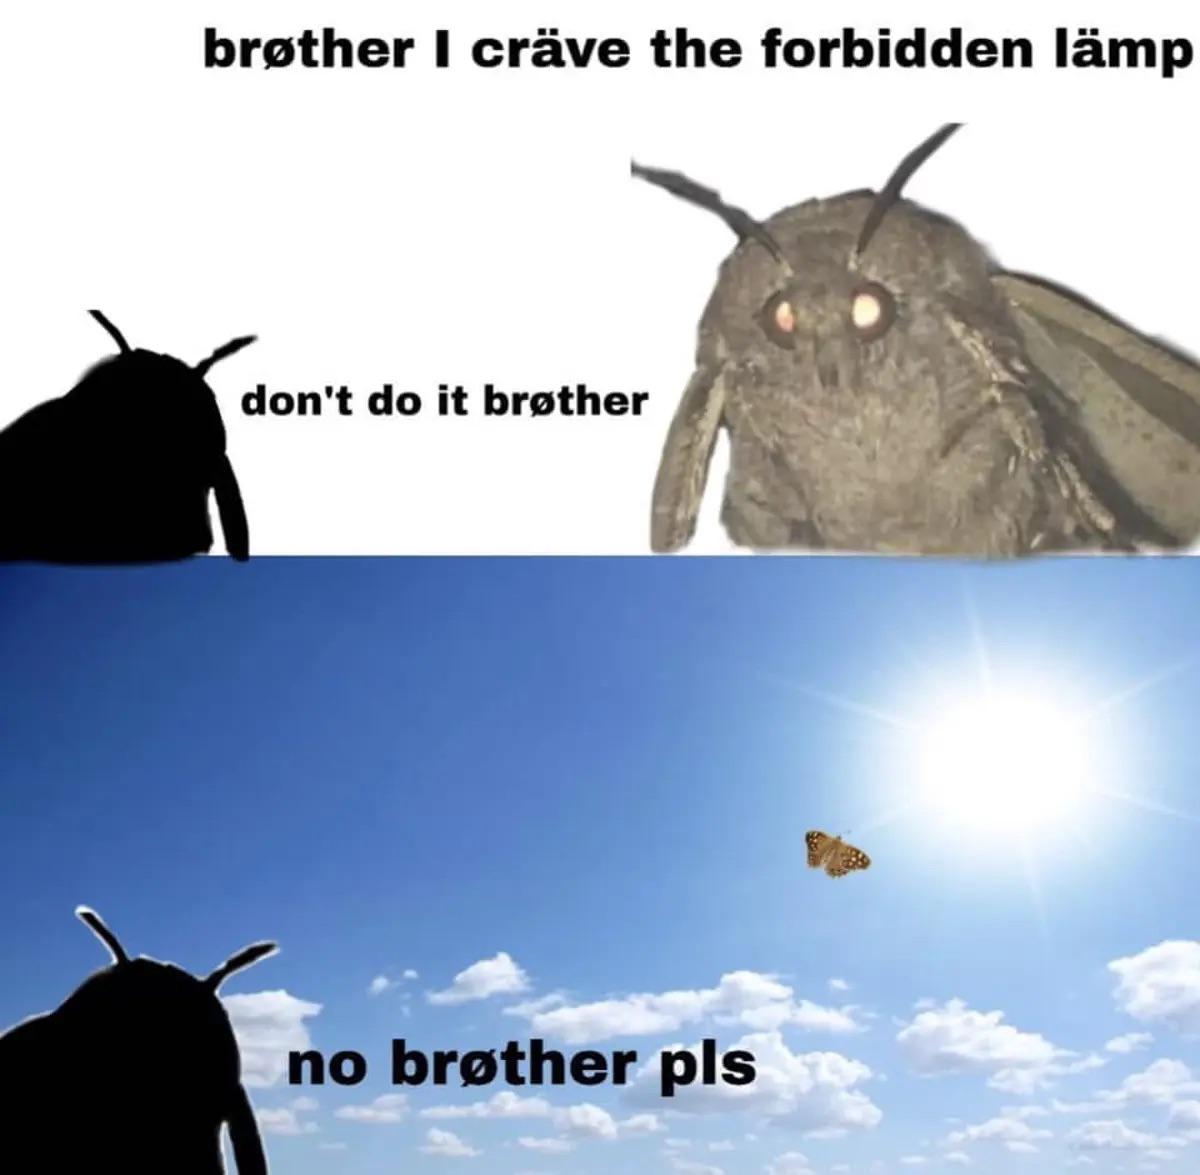 the+forbidden+lamp